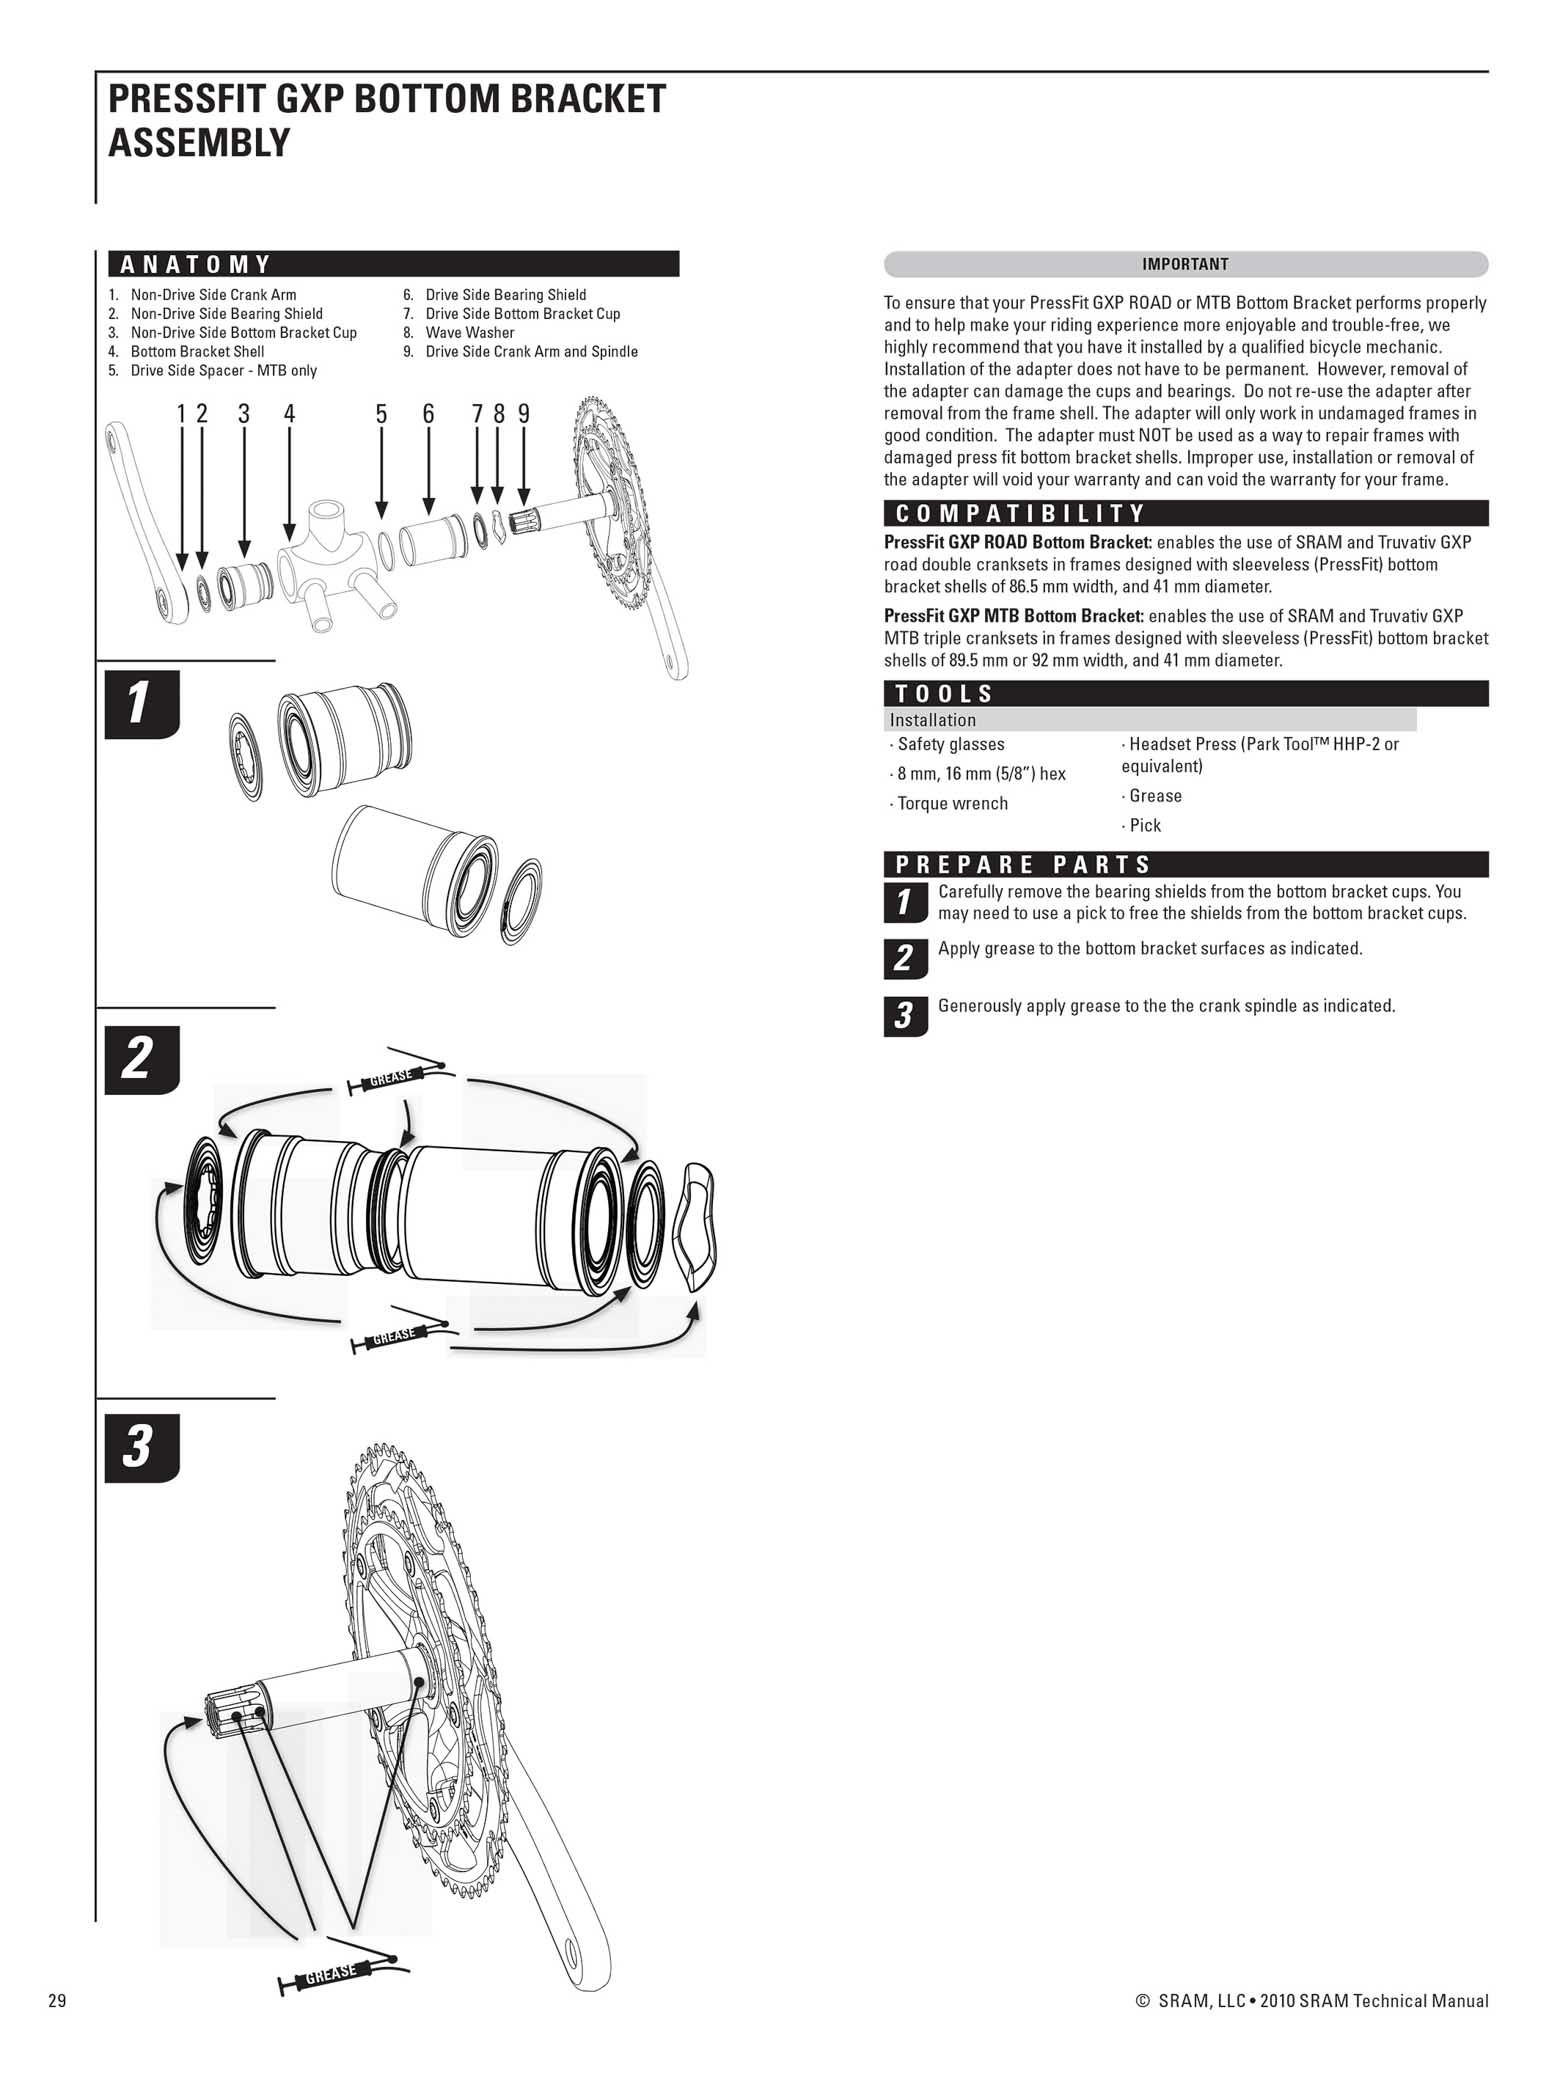 SRAM Technical Manual 2010 page 029 main image